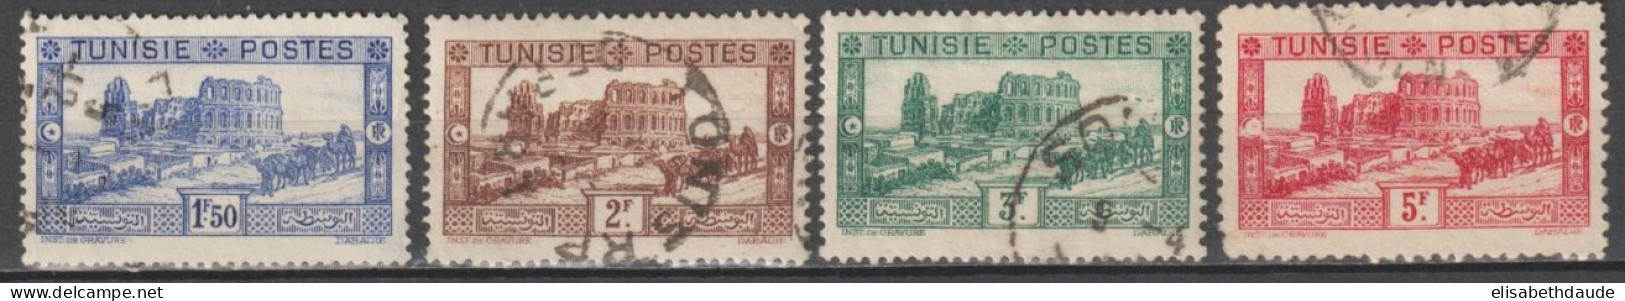 TUNISIE - 1931 - YVERT N°175/178 OBLITERES - COTE = 43.75 EUR. - Usados